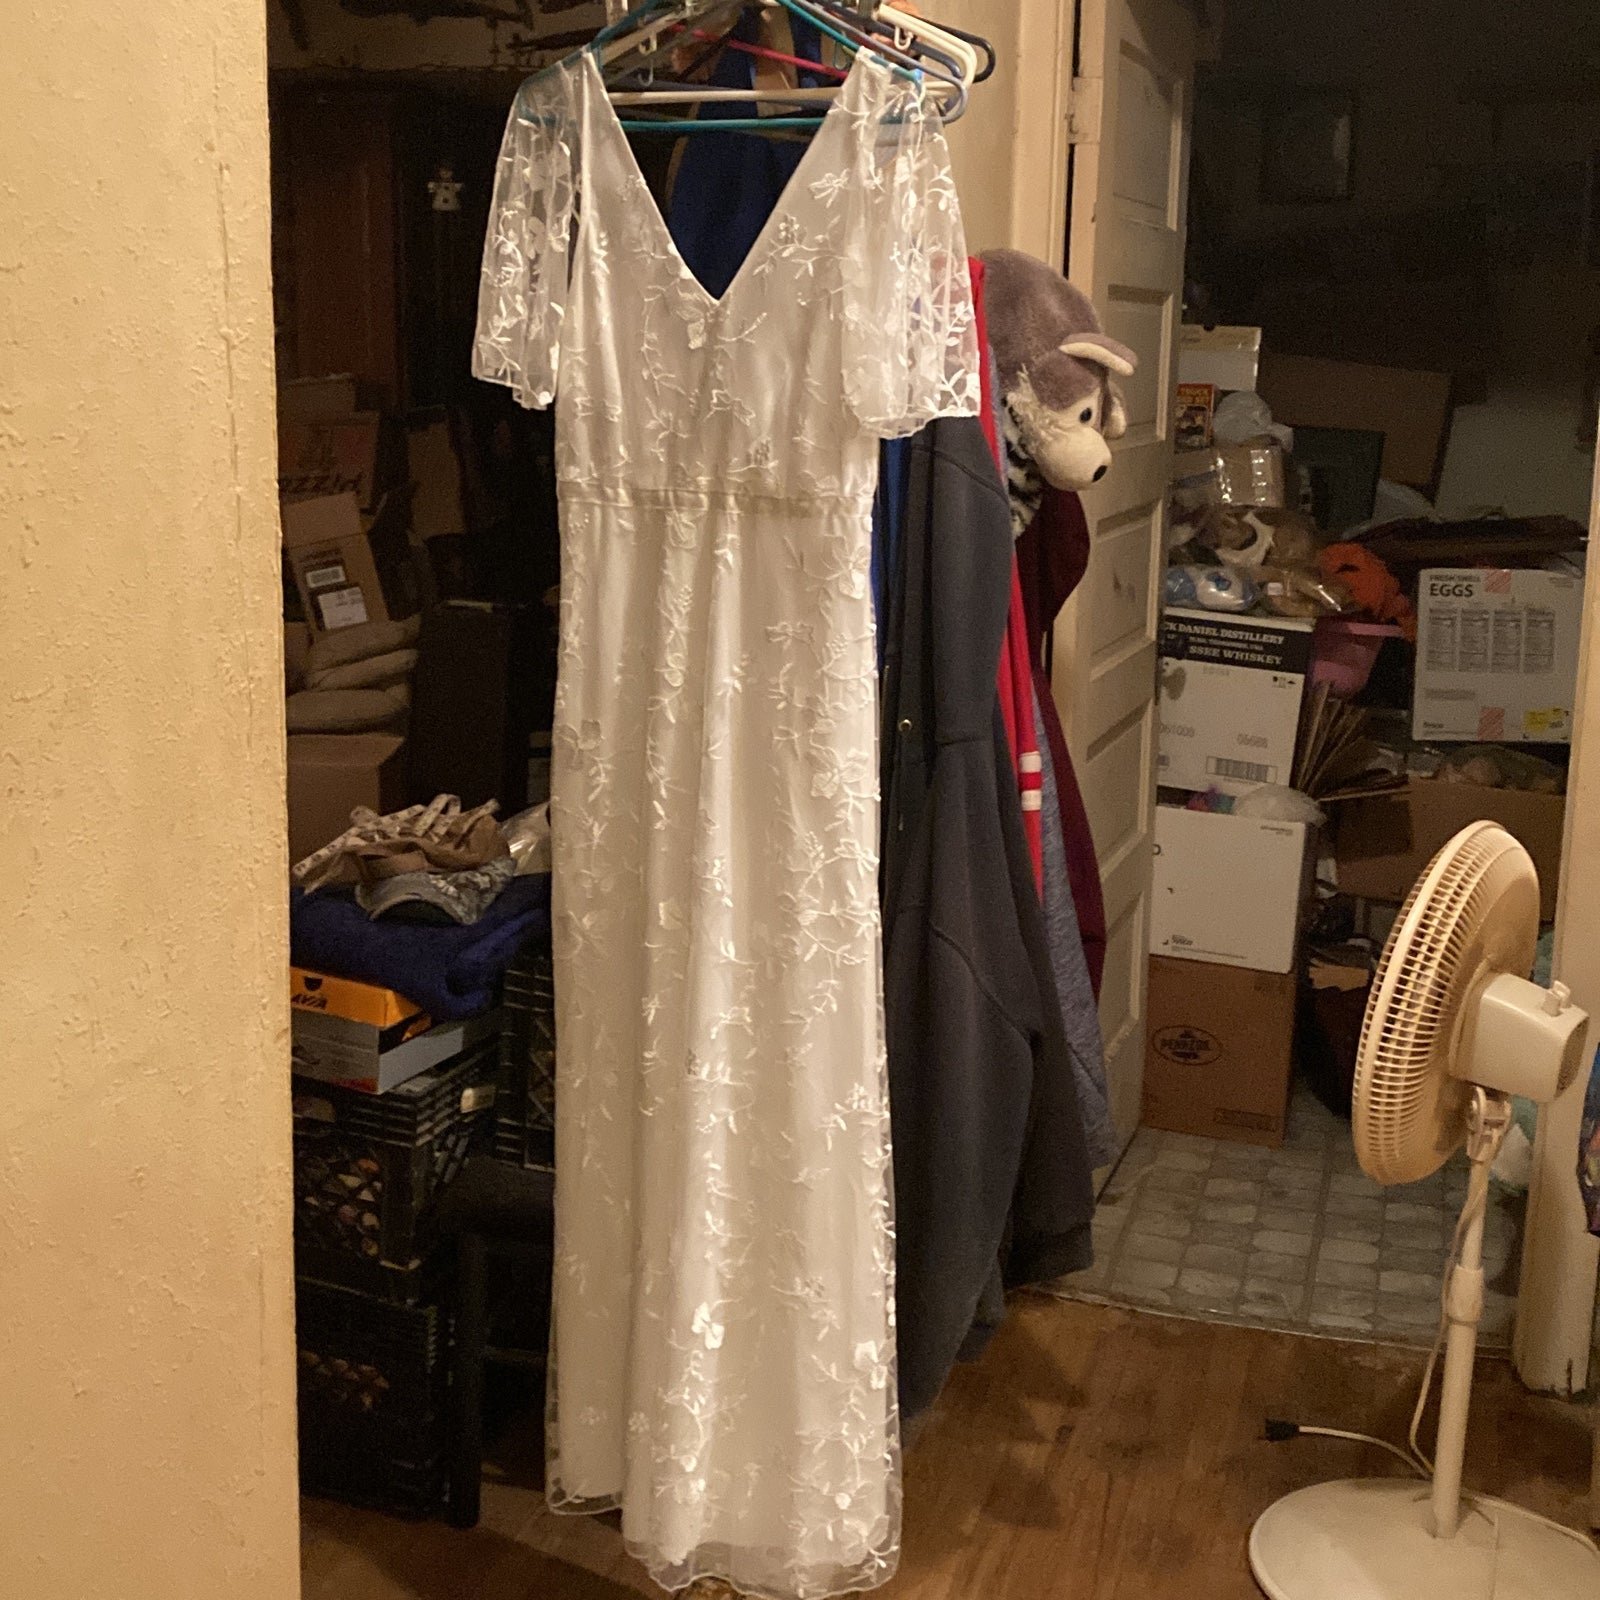 Discounted Beautiful Elegant Long White Lace Prom/Wedding Dress OZ0i0oj0r online store